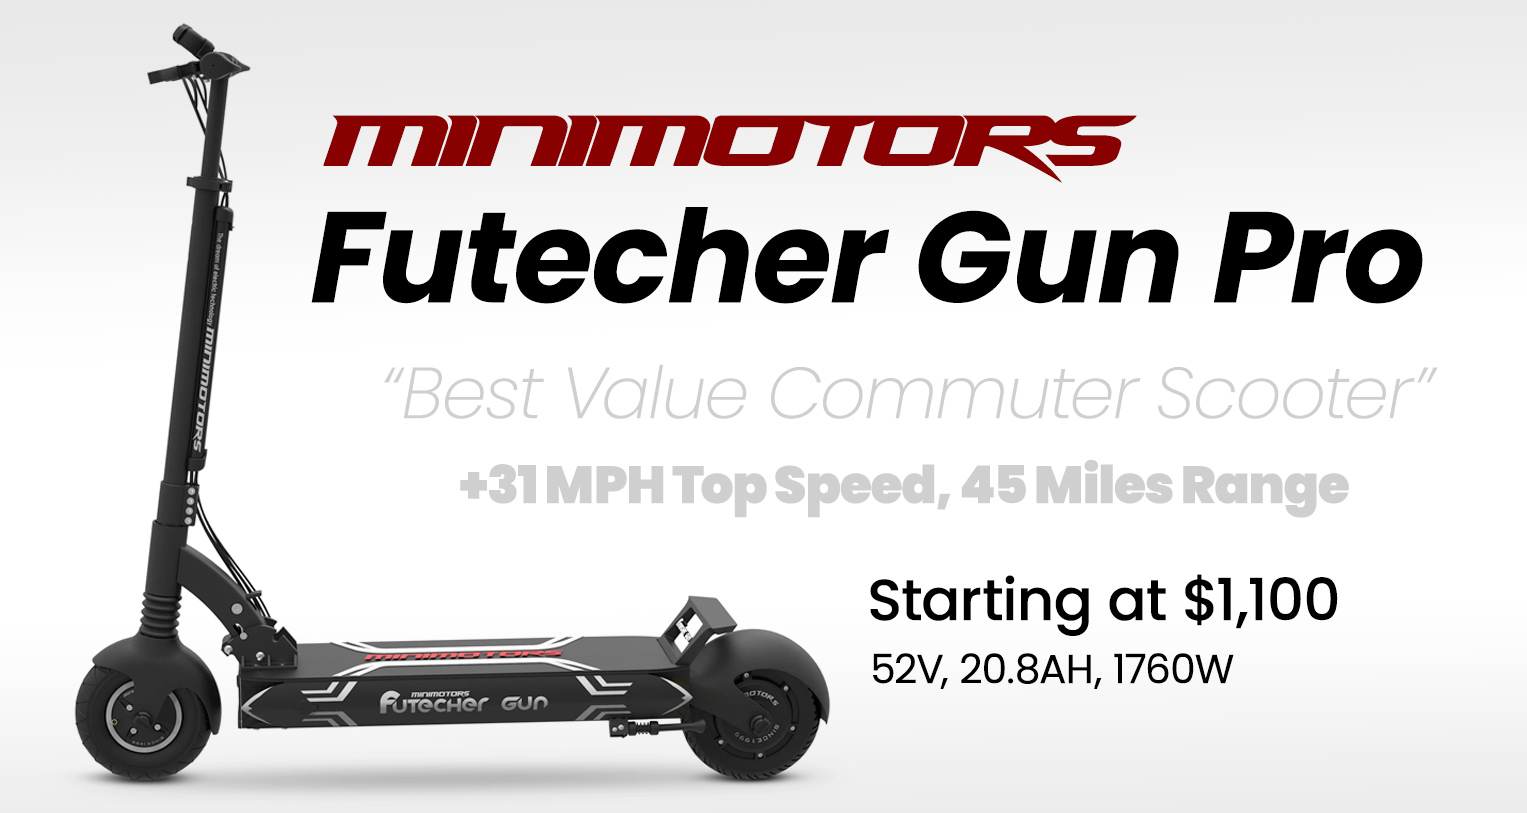 Futecher Gun Pro Electric Scooter Released